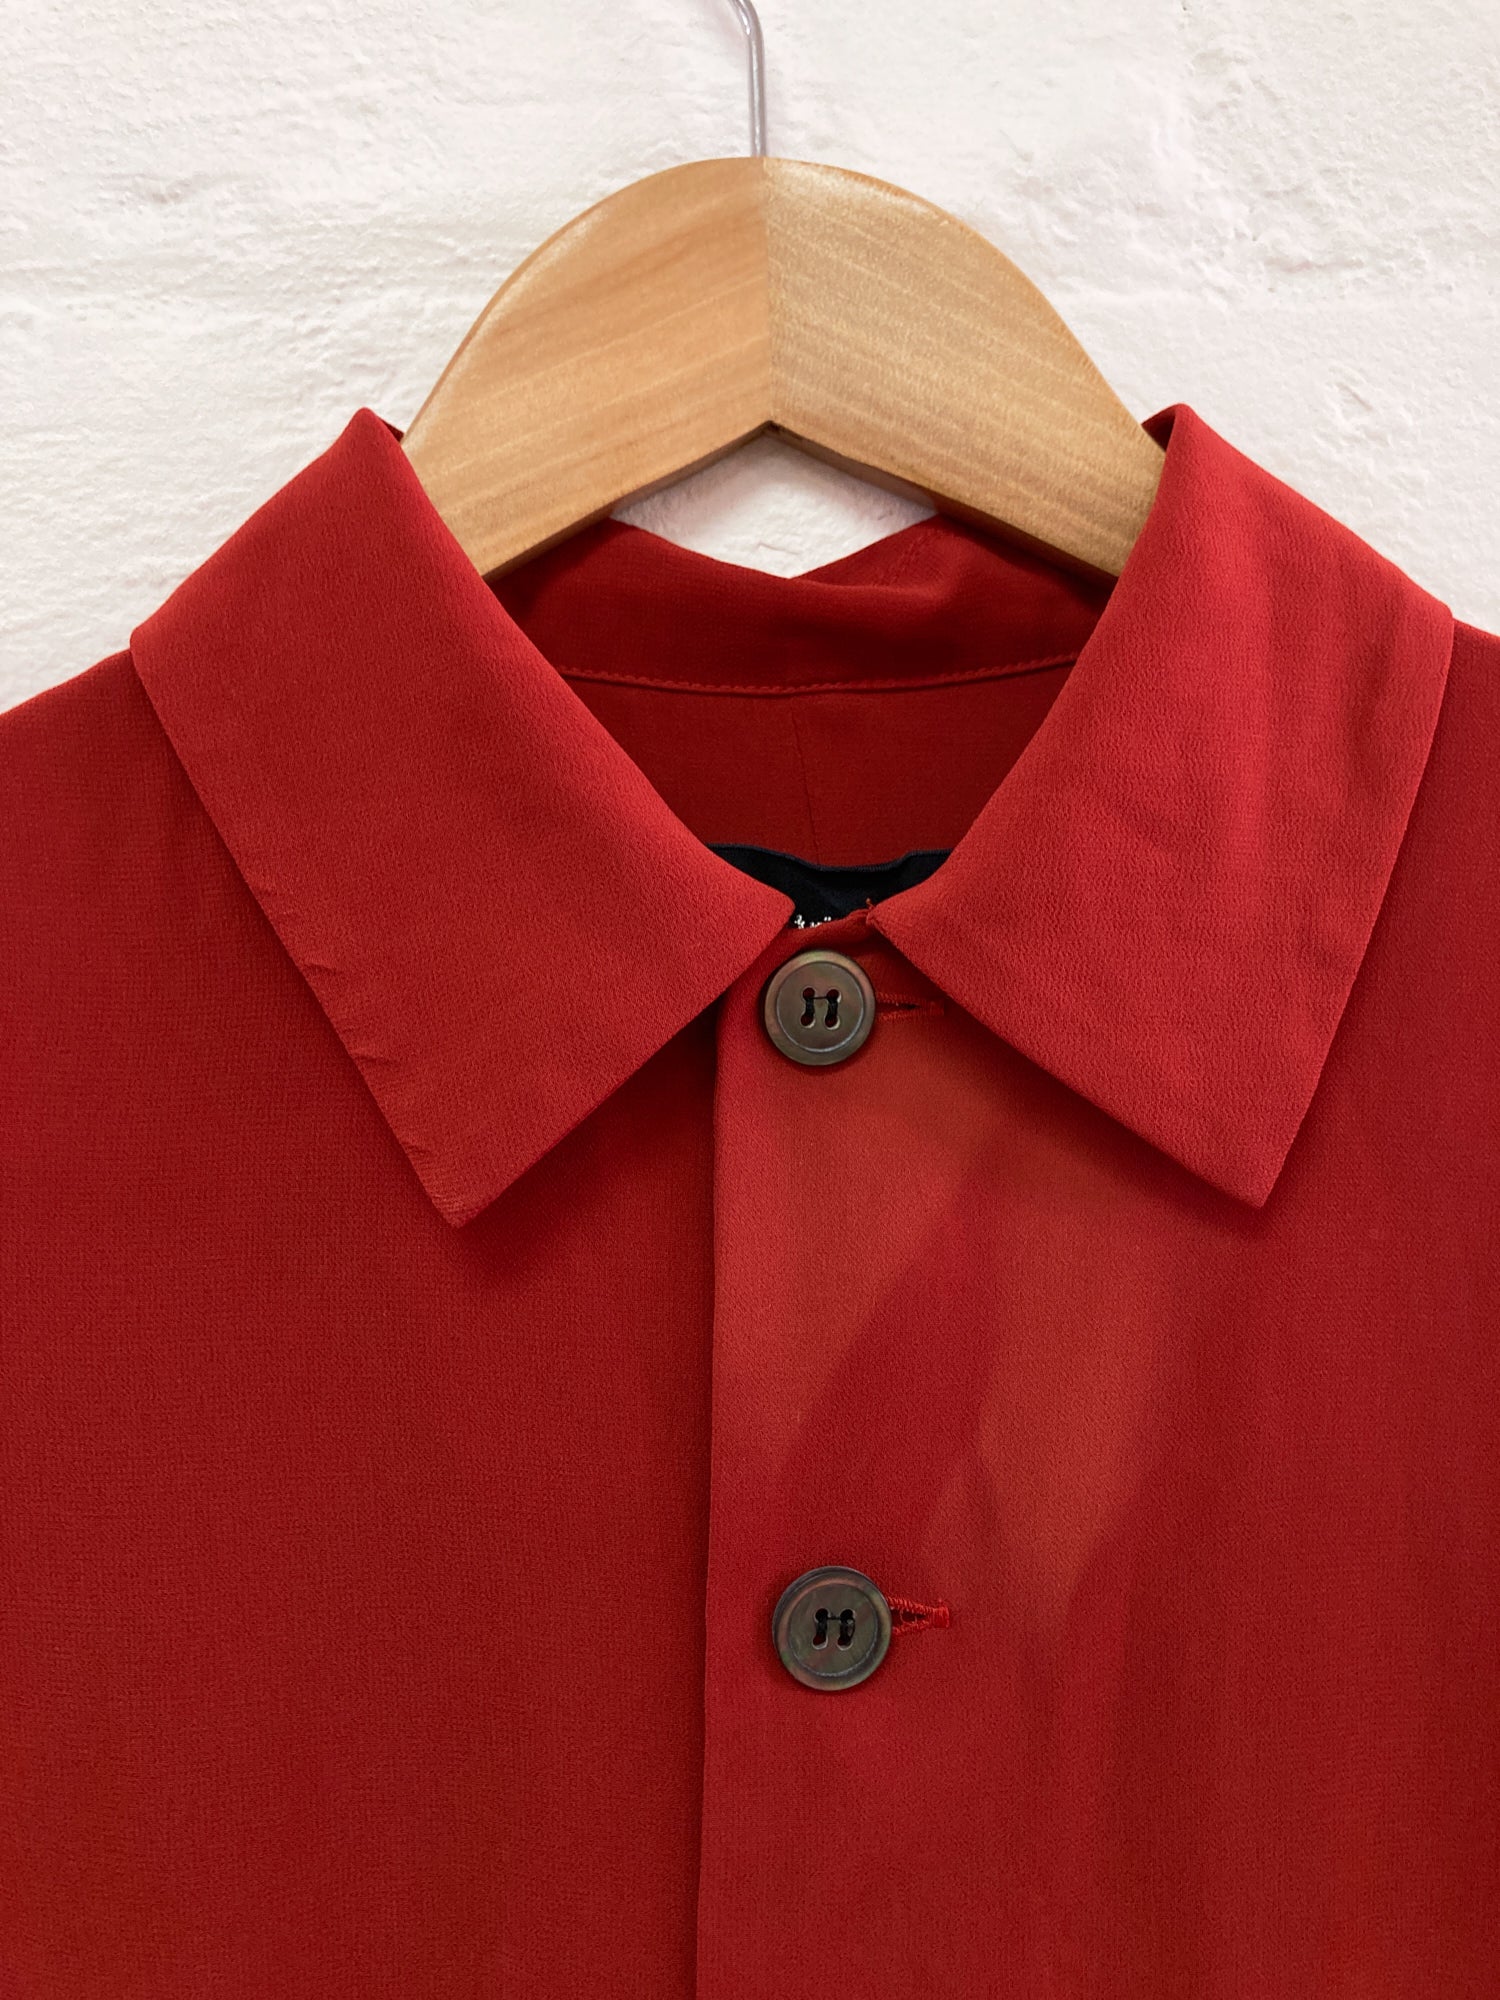 Comme des Garcons 1996 burgundy polyester crepe short sleeve darted shirt - S M